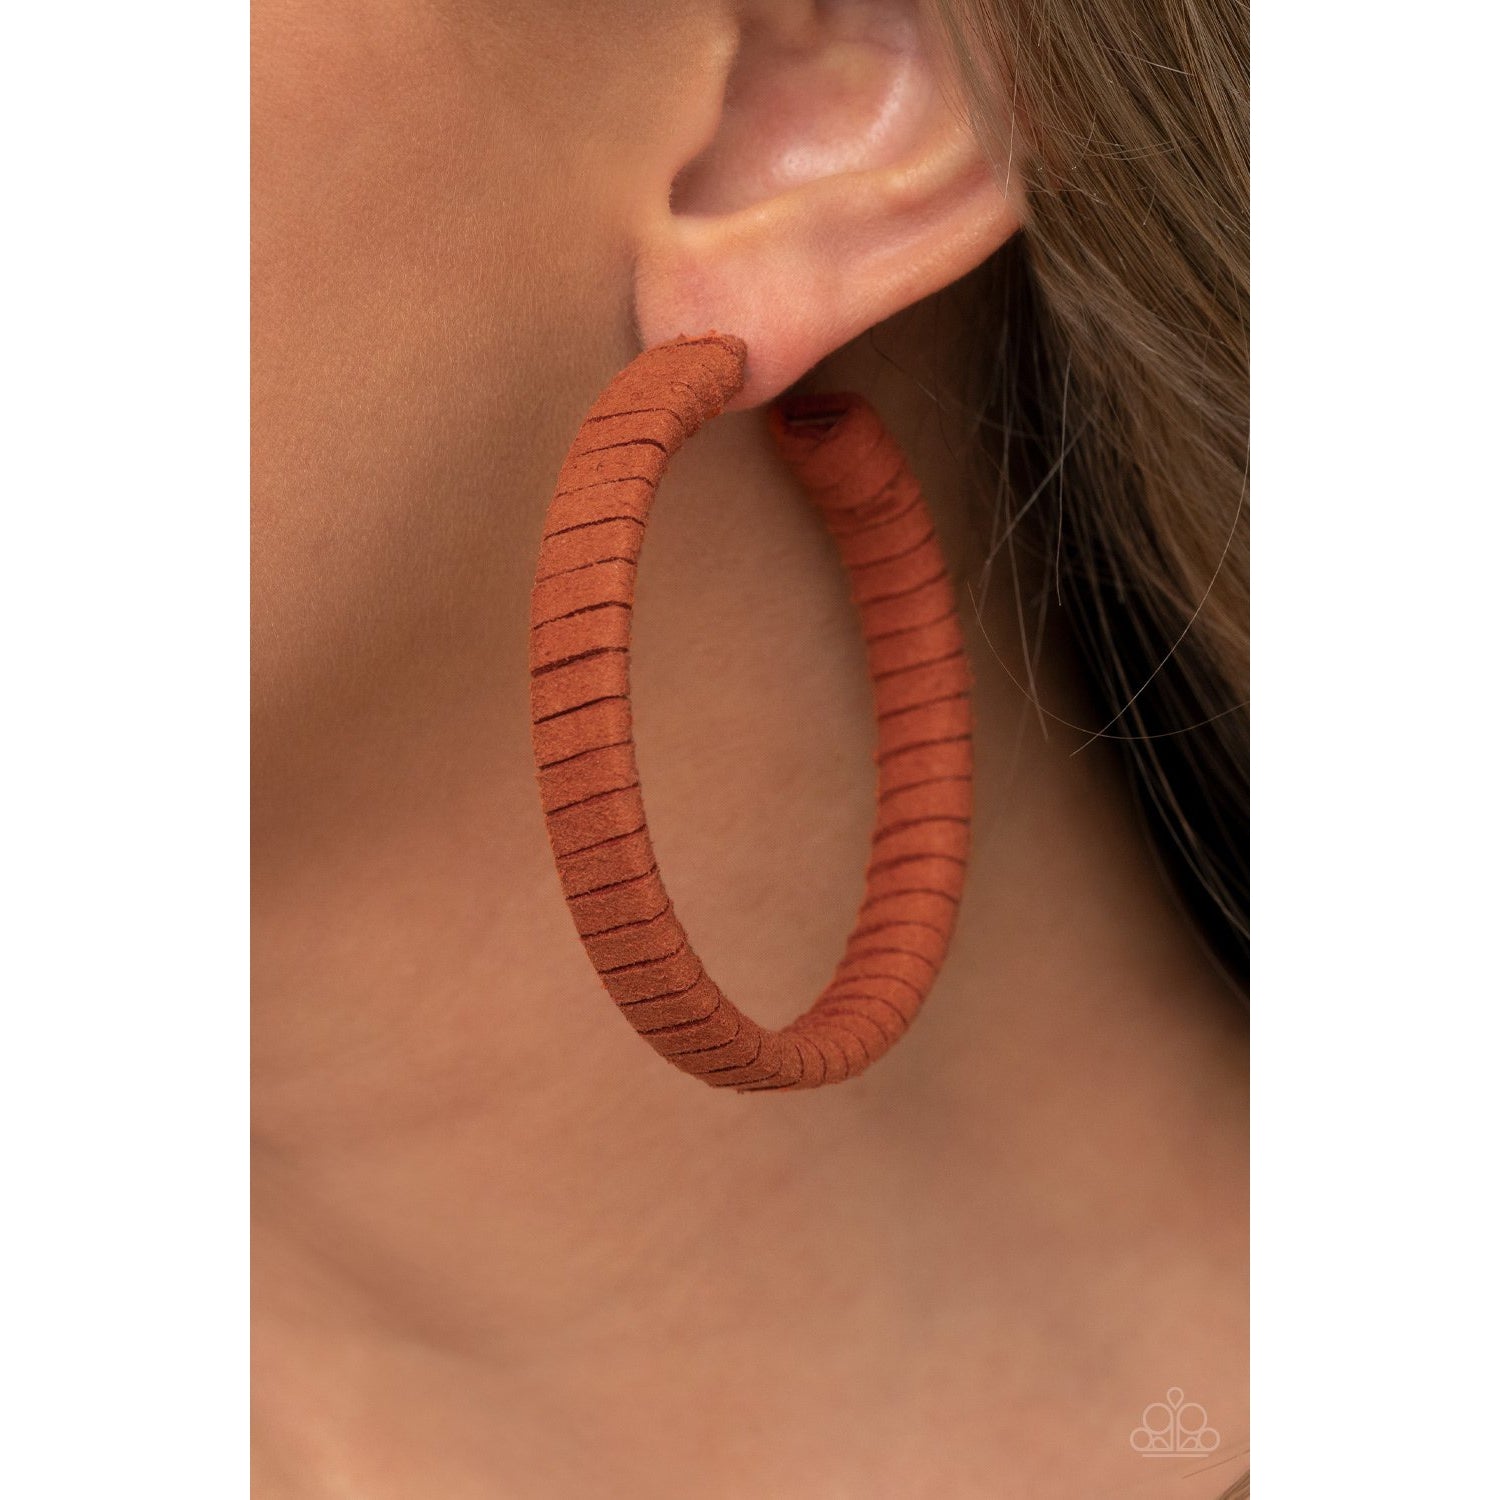 Suede Parade - Orange Hoop Earrings - Paparazzi Accessories - GlaMarous Titi Jewels